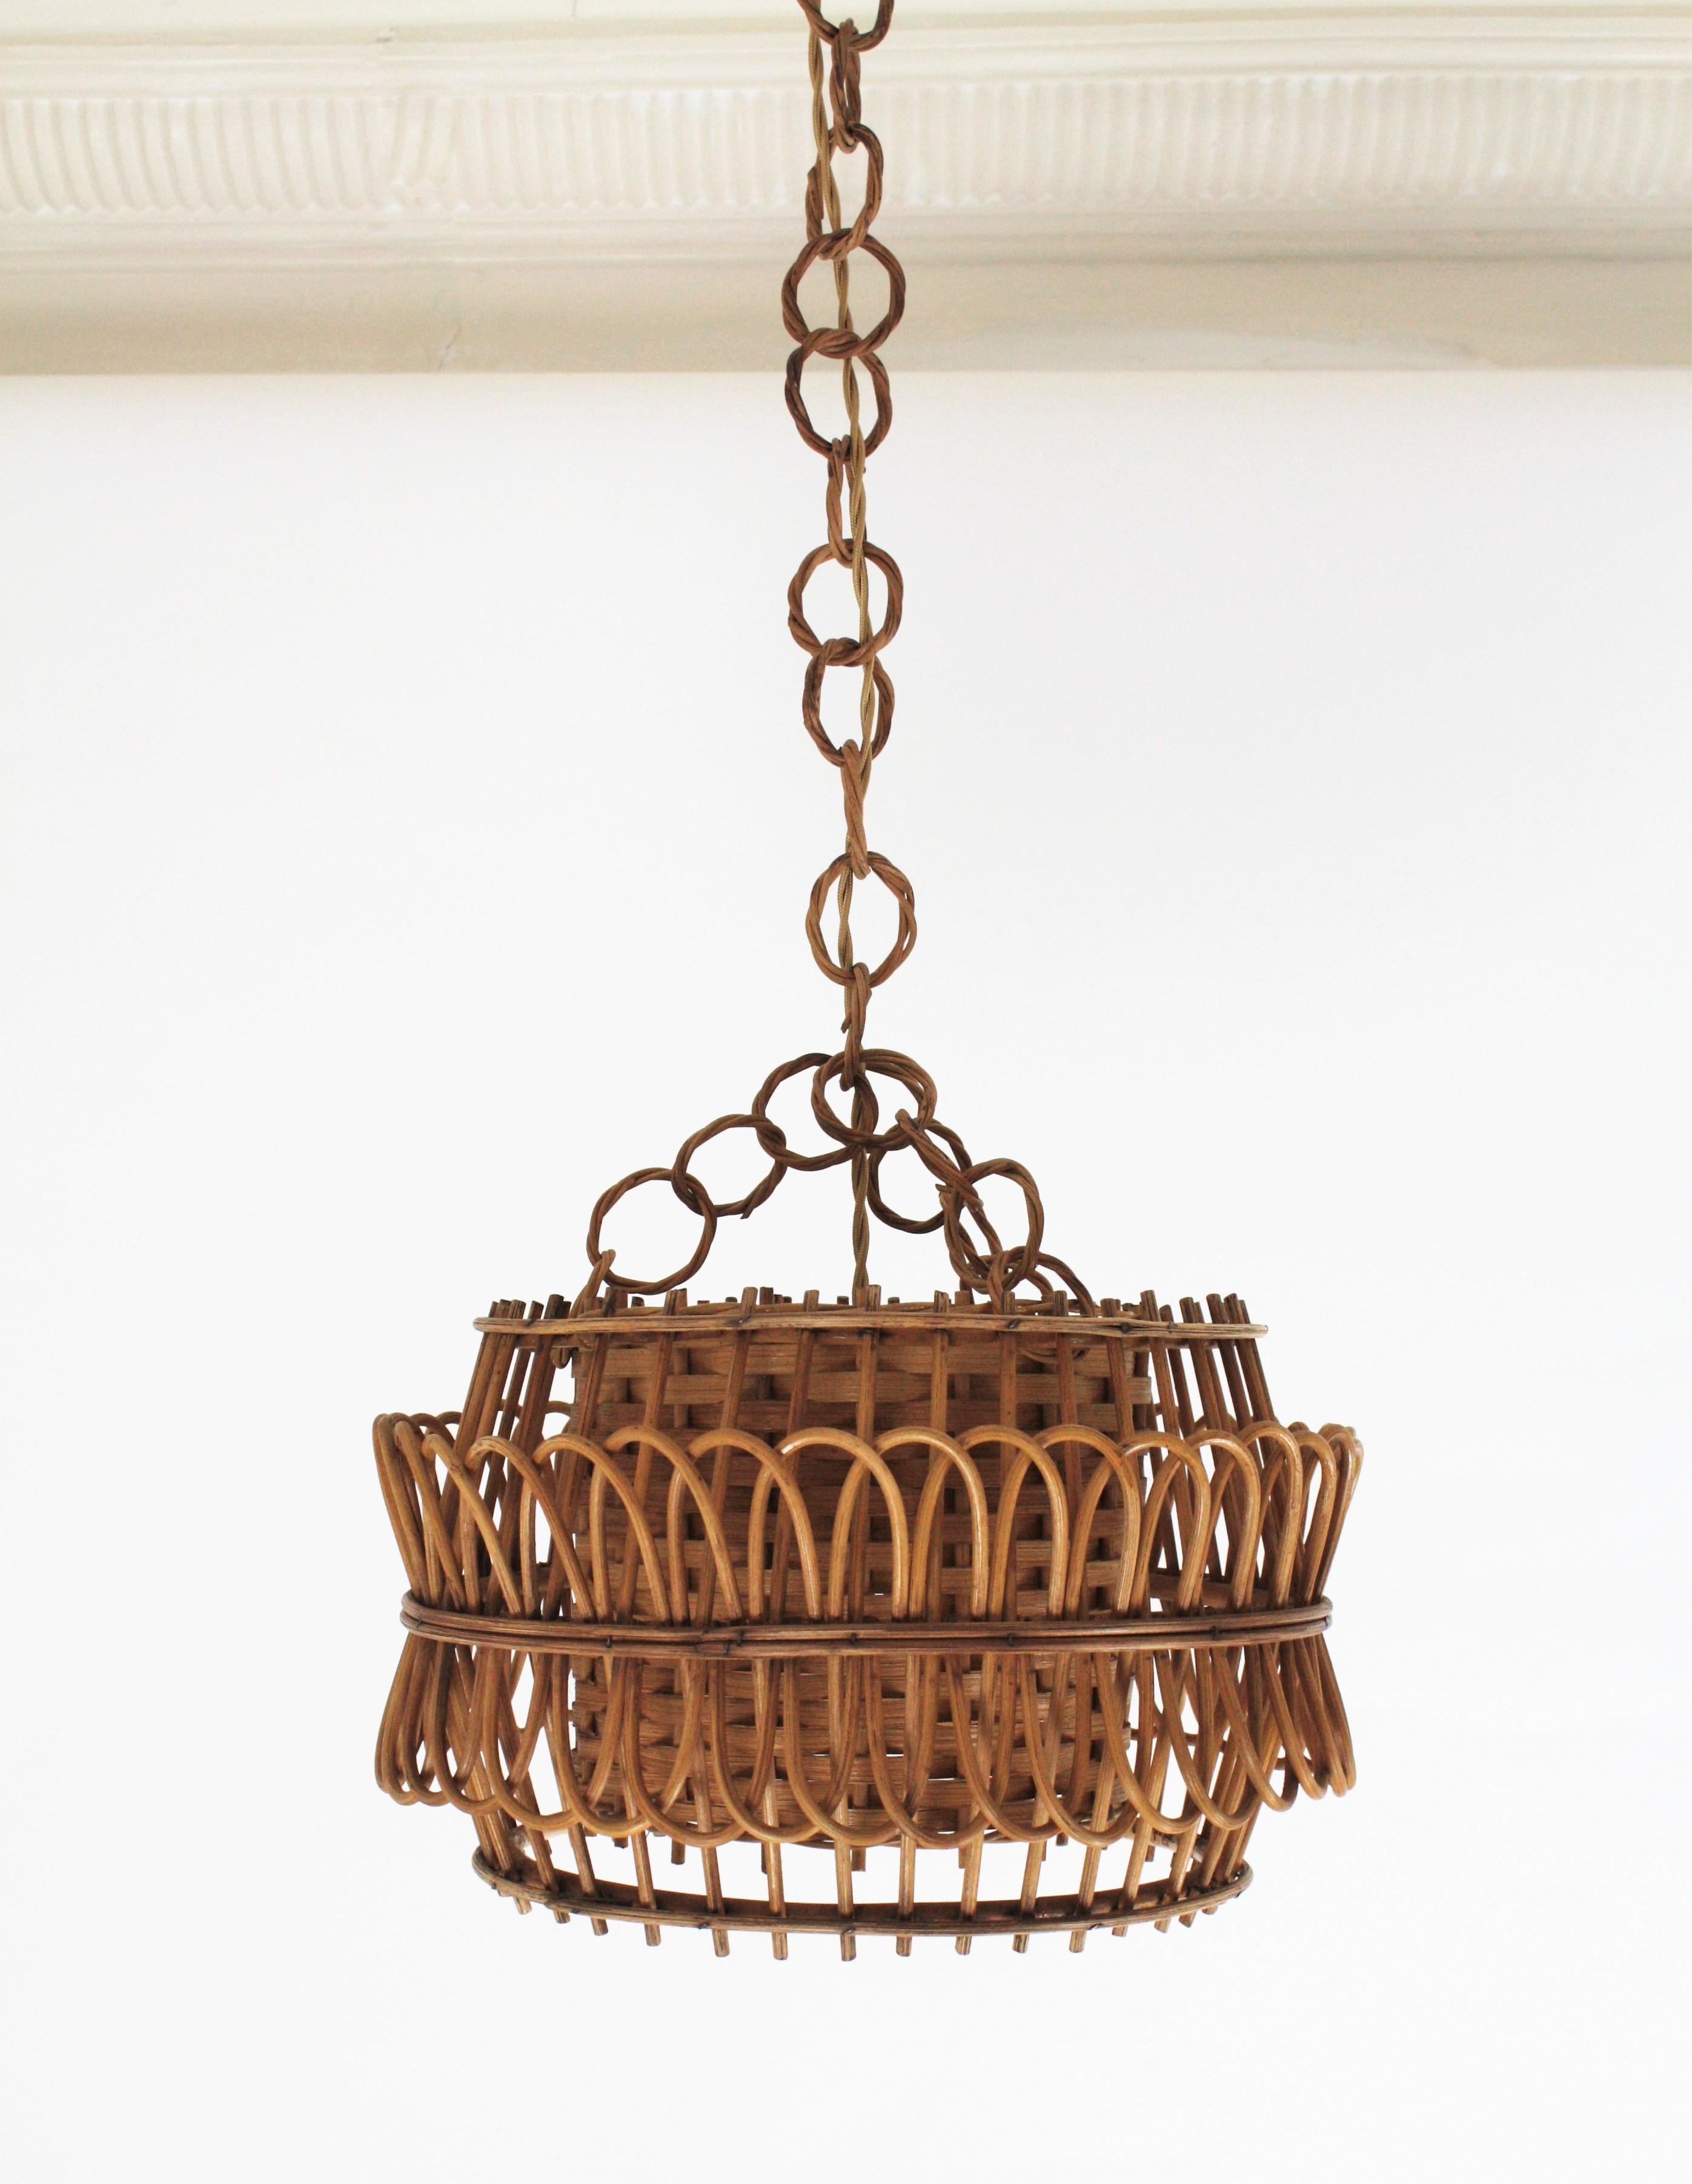 20th Century Spanish Modernist Rattan Pendant Lamp / Hanging Light with Woven Wicker Shade